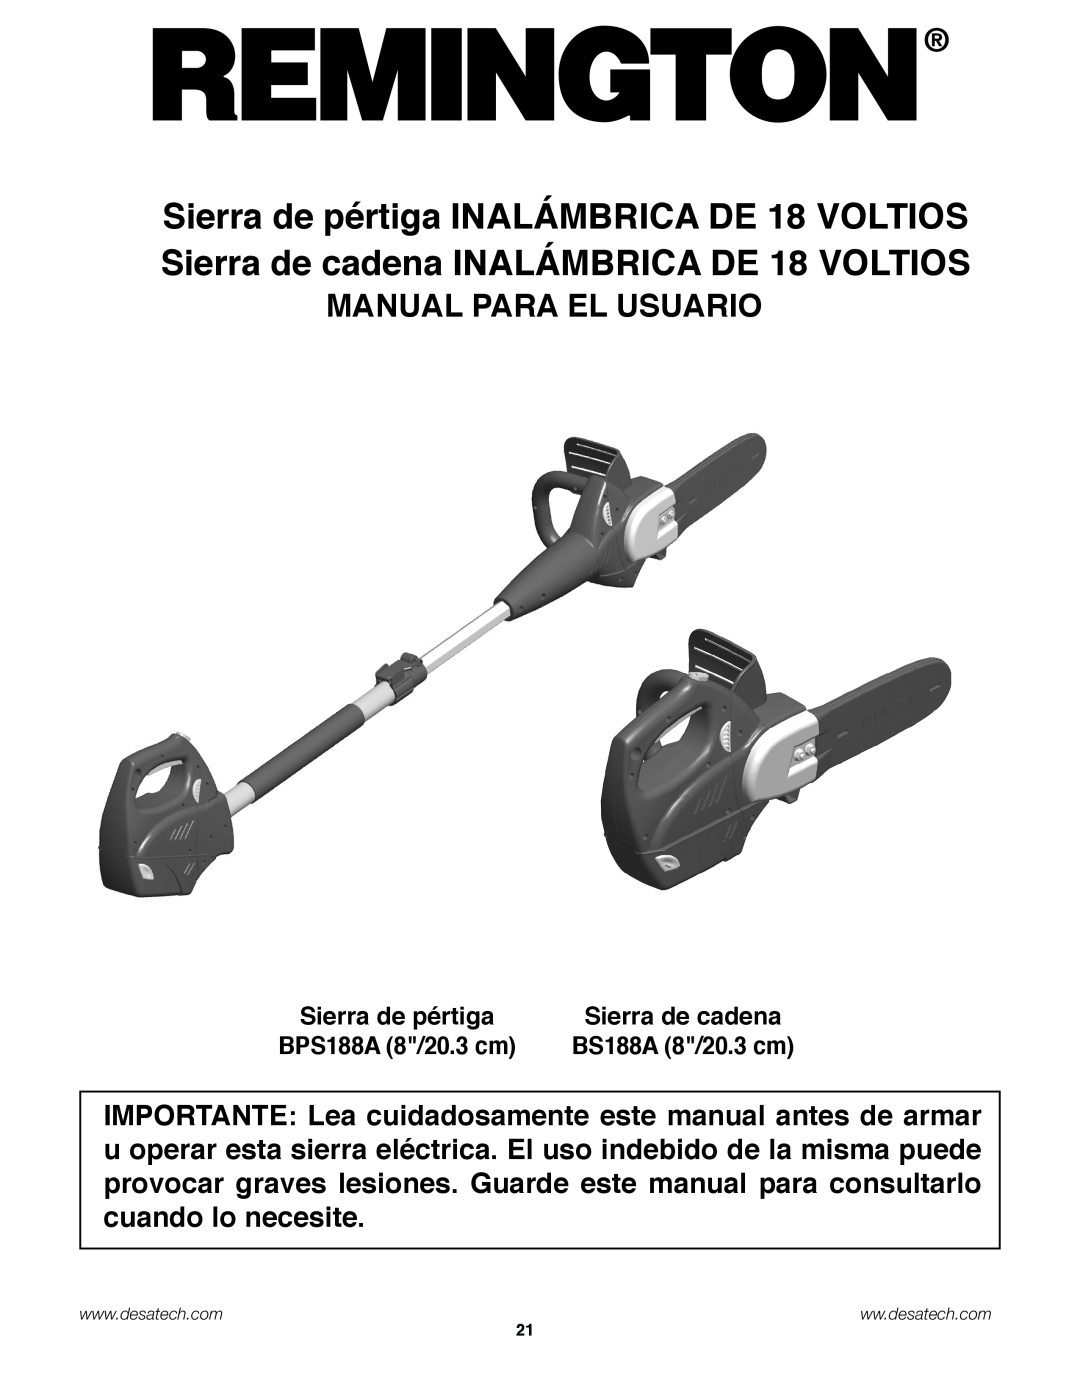 Remington Power Tools BS188A, BPS188A, BS188A Manual Para El Usuario, Sierra de pértiga, Sierra de cadena, ww.desatech.com 